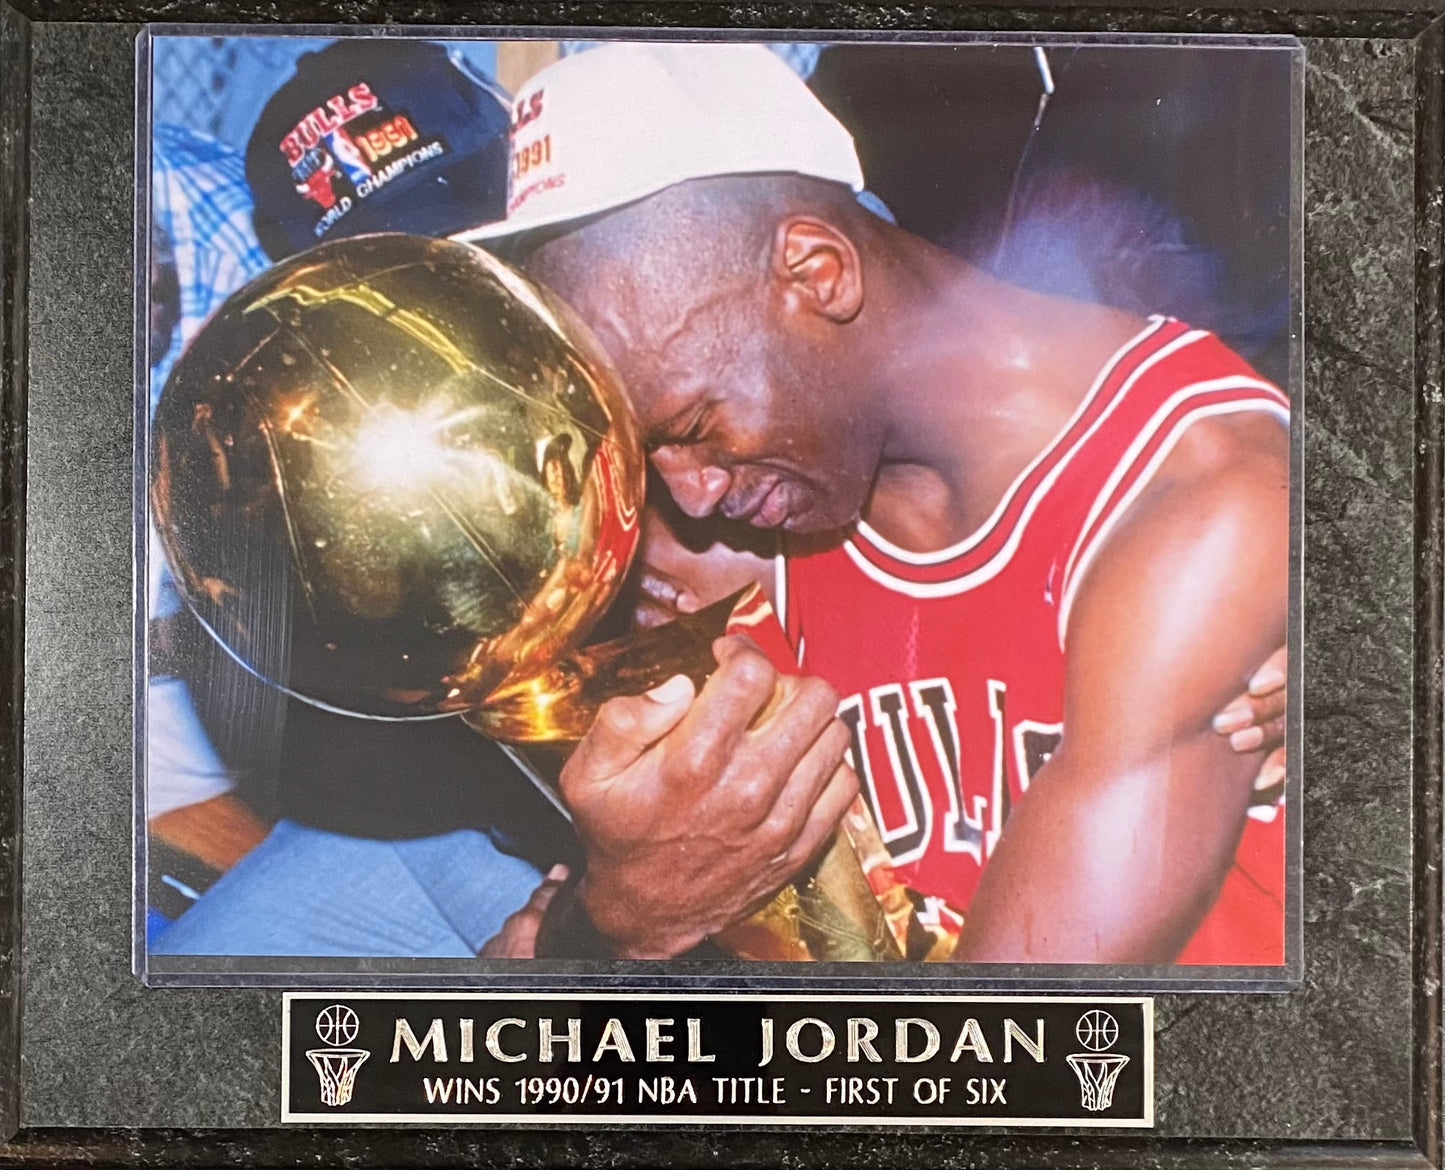 Michael Jordan "Wins 1990/1991 NBA Title - First of Six" Chicago Bulls Plaque